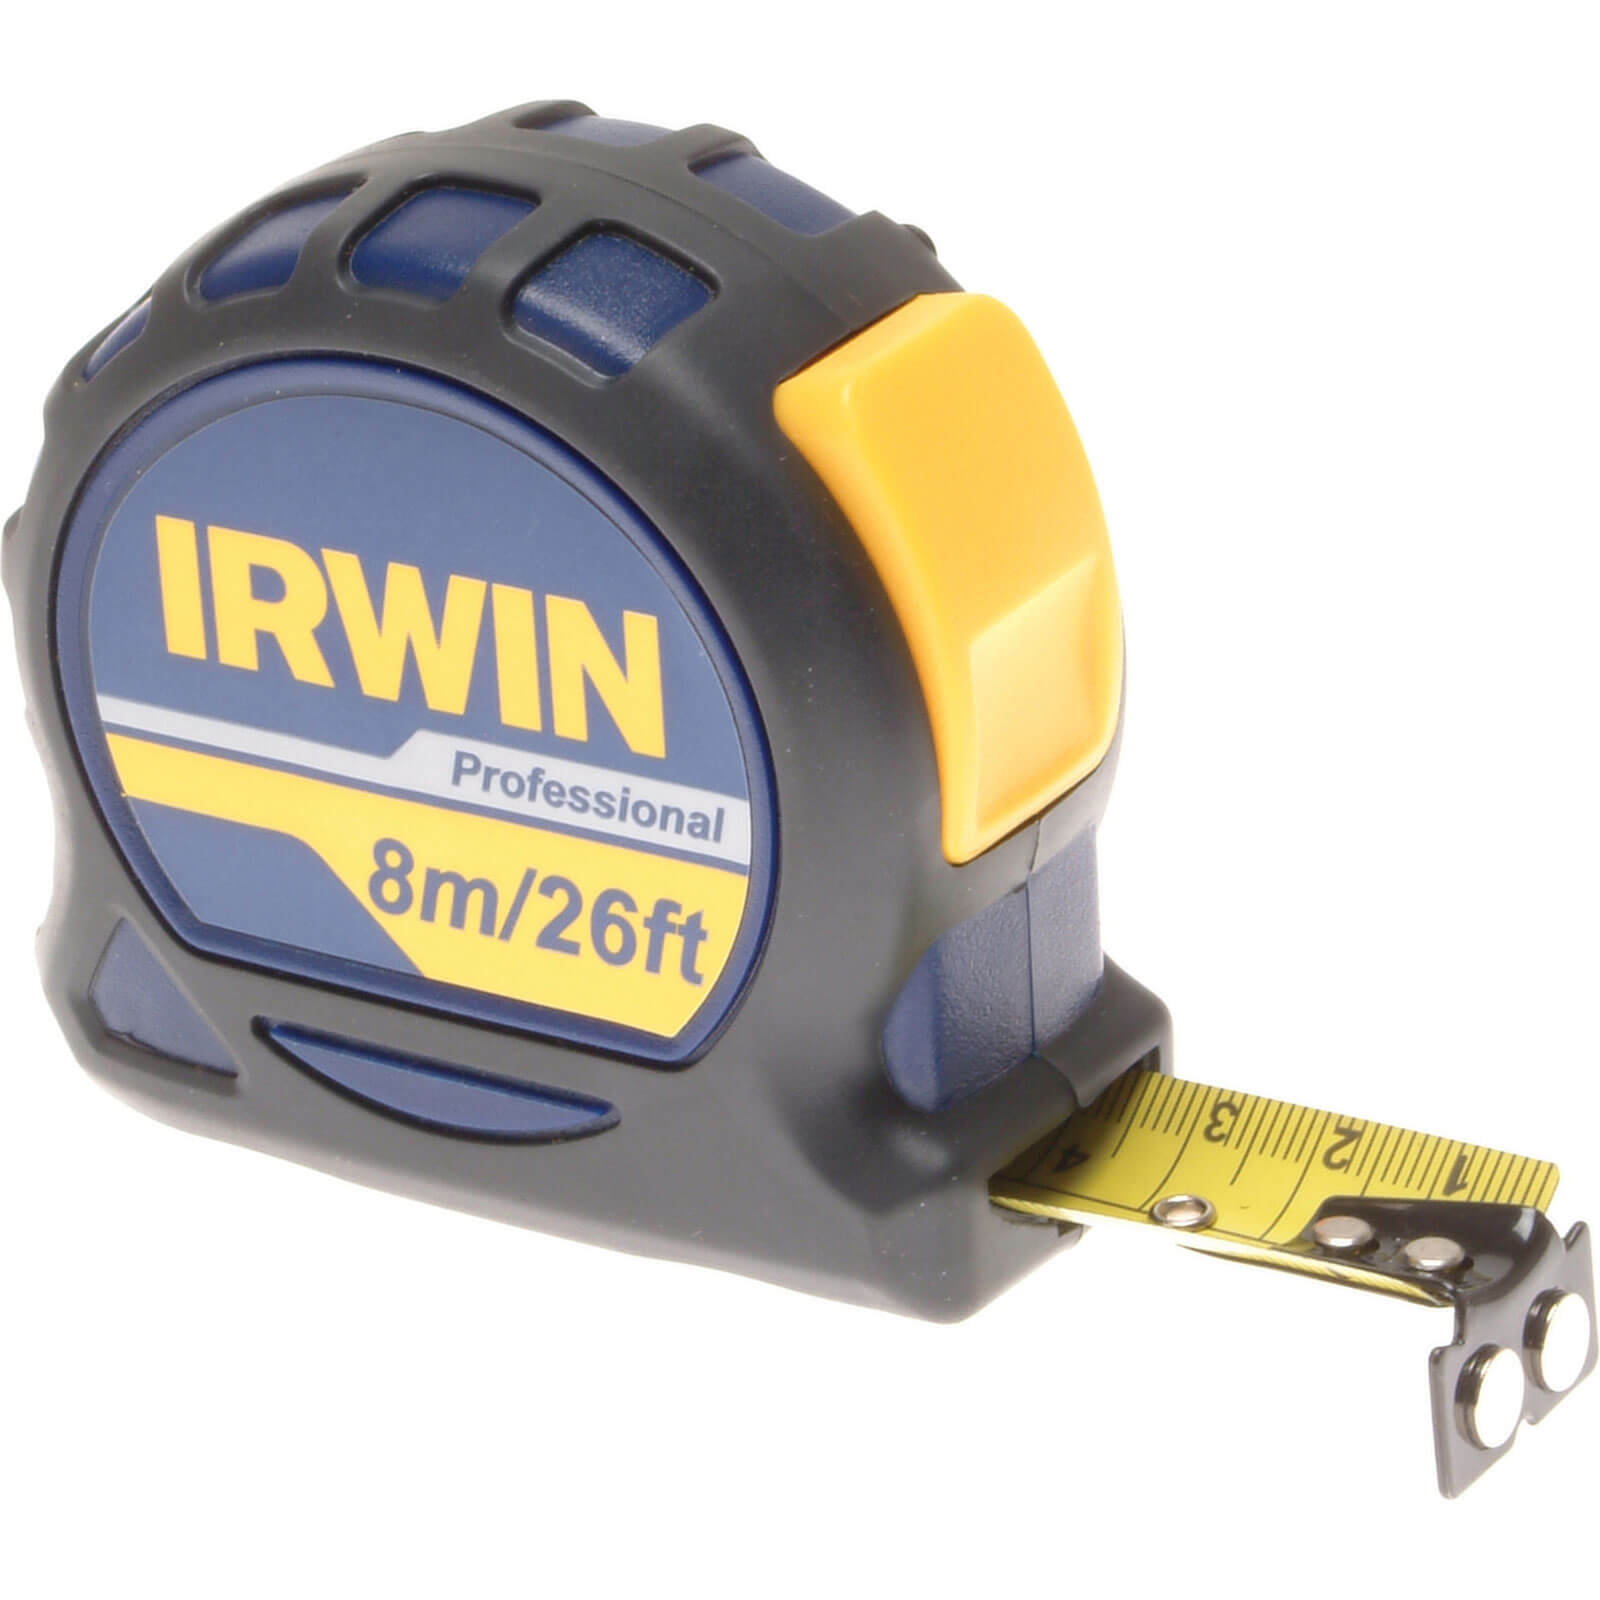 Photos - Tape Measure and Surveyor Tape IRWIN Professional Pocket Tape Measure Imperial & Metric 26ft / 8m 25mm IR 